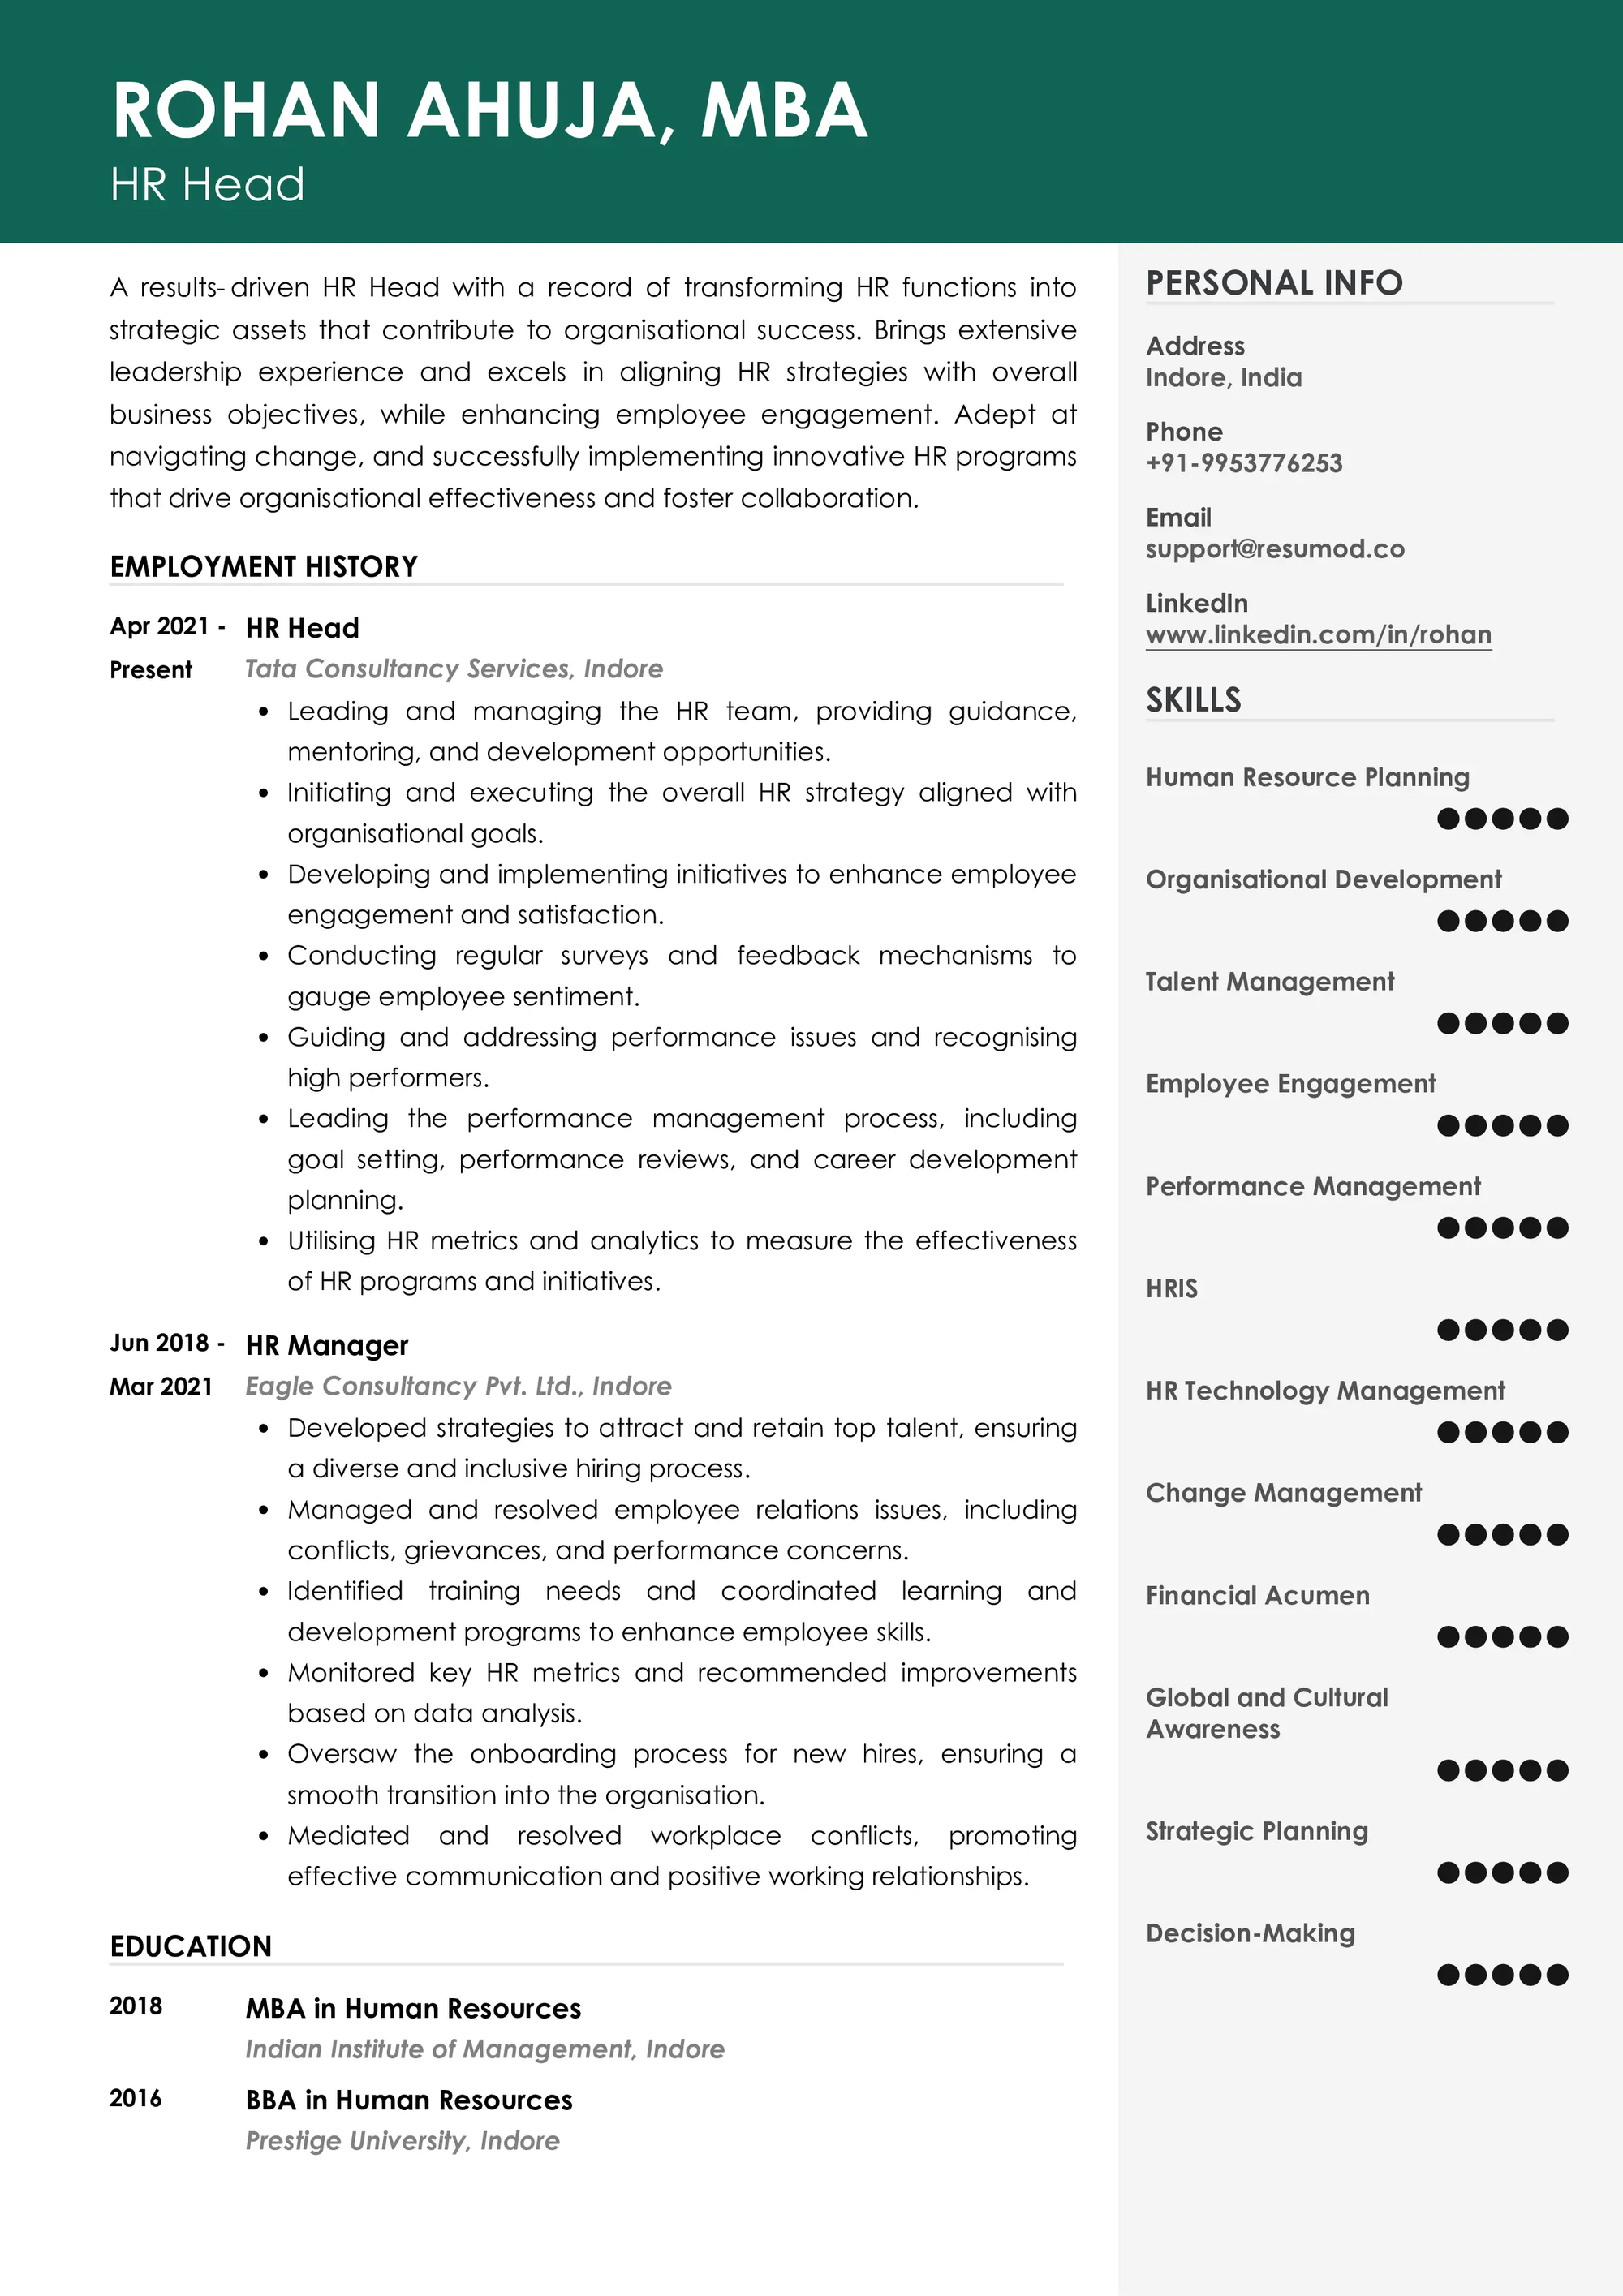 Resume of HR Head built on Resumod